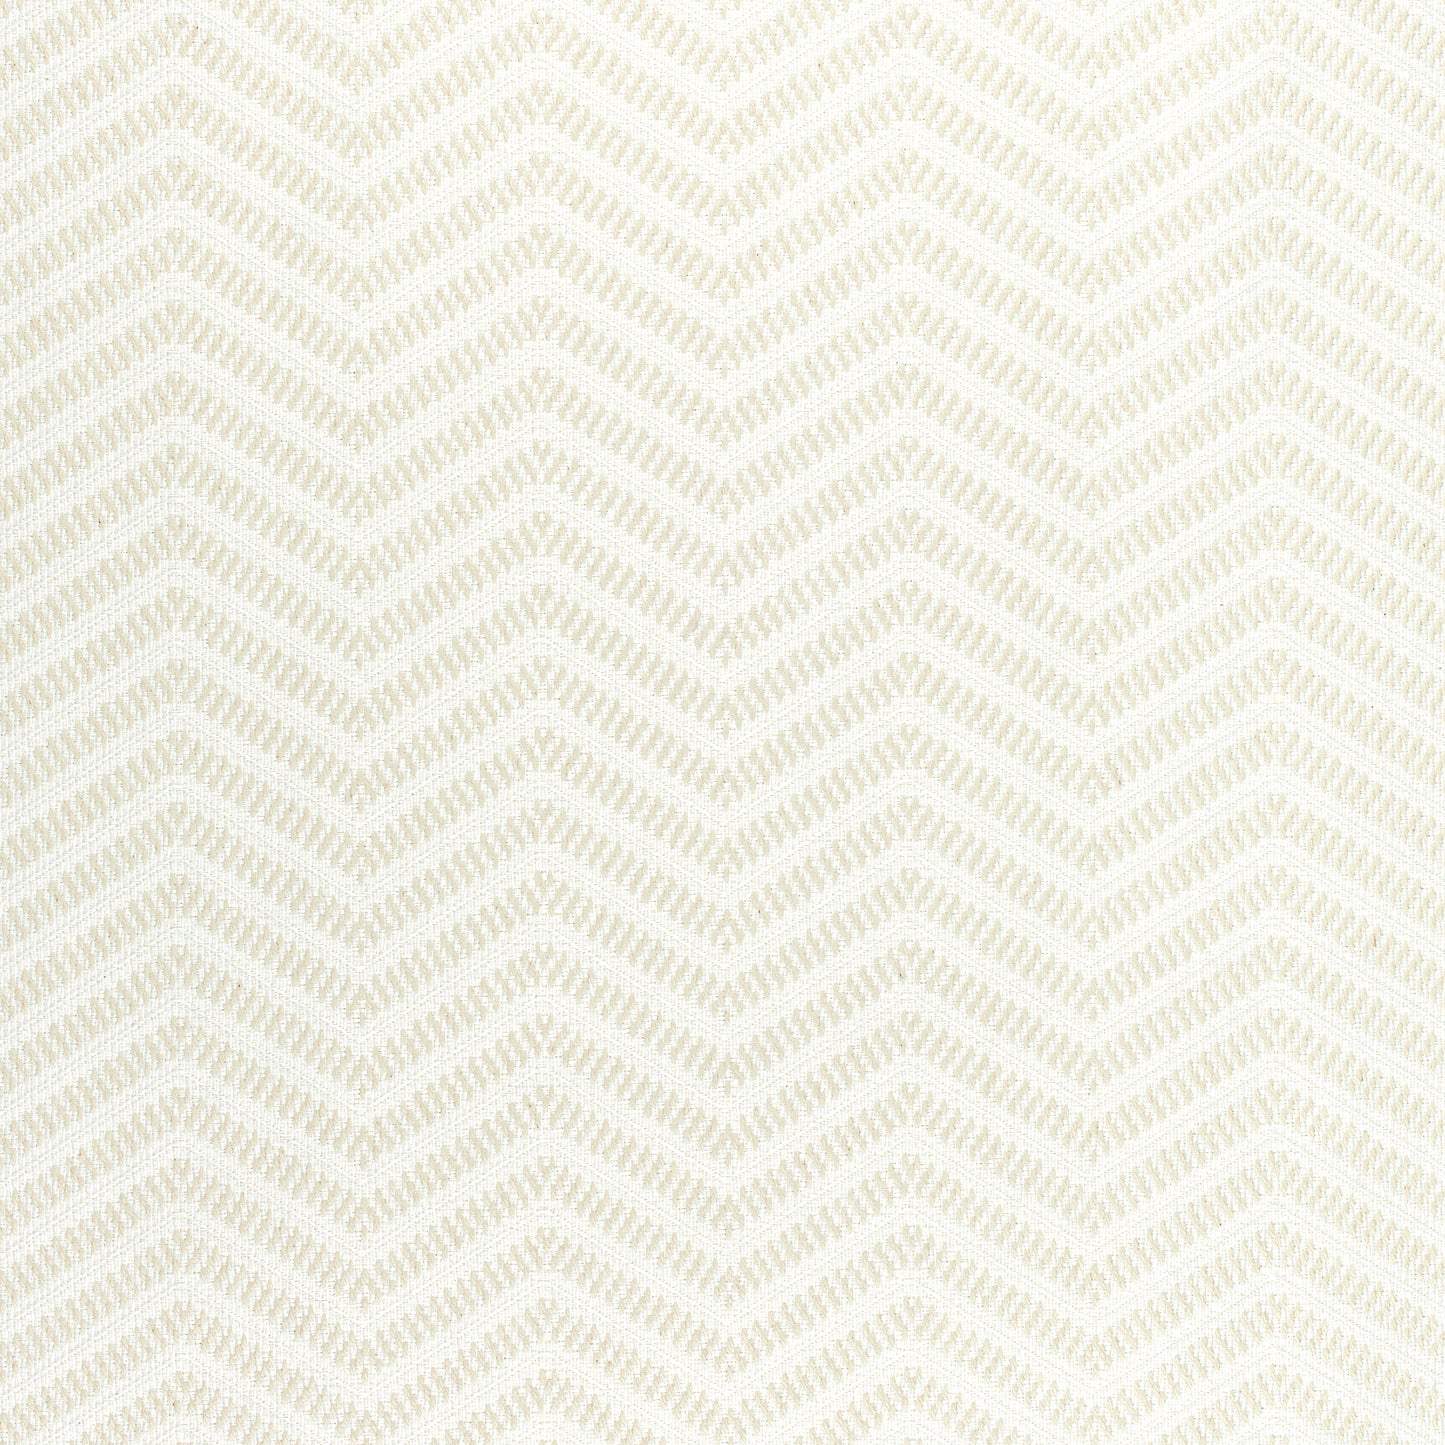 Purchase Thibaut Fabric Pattern number W80631 pattern name Matari Chevron color Almond